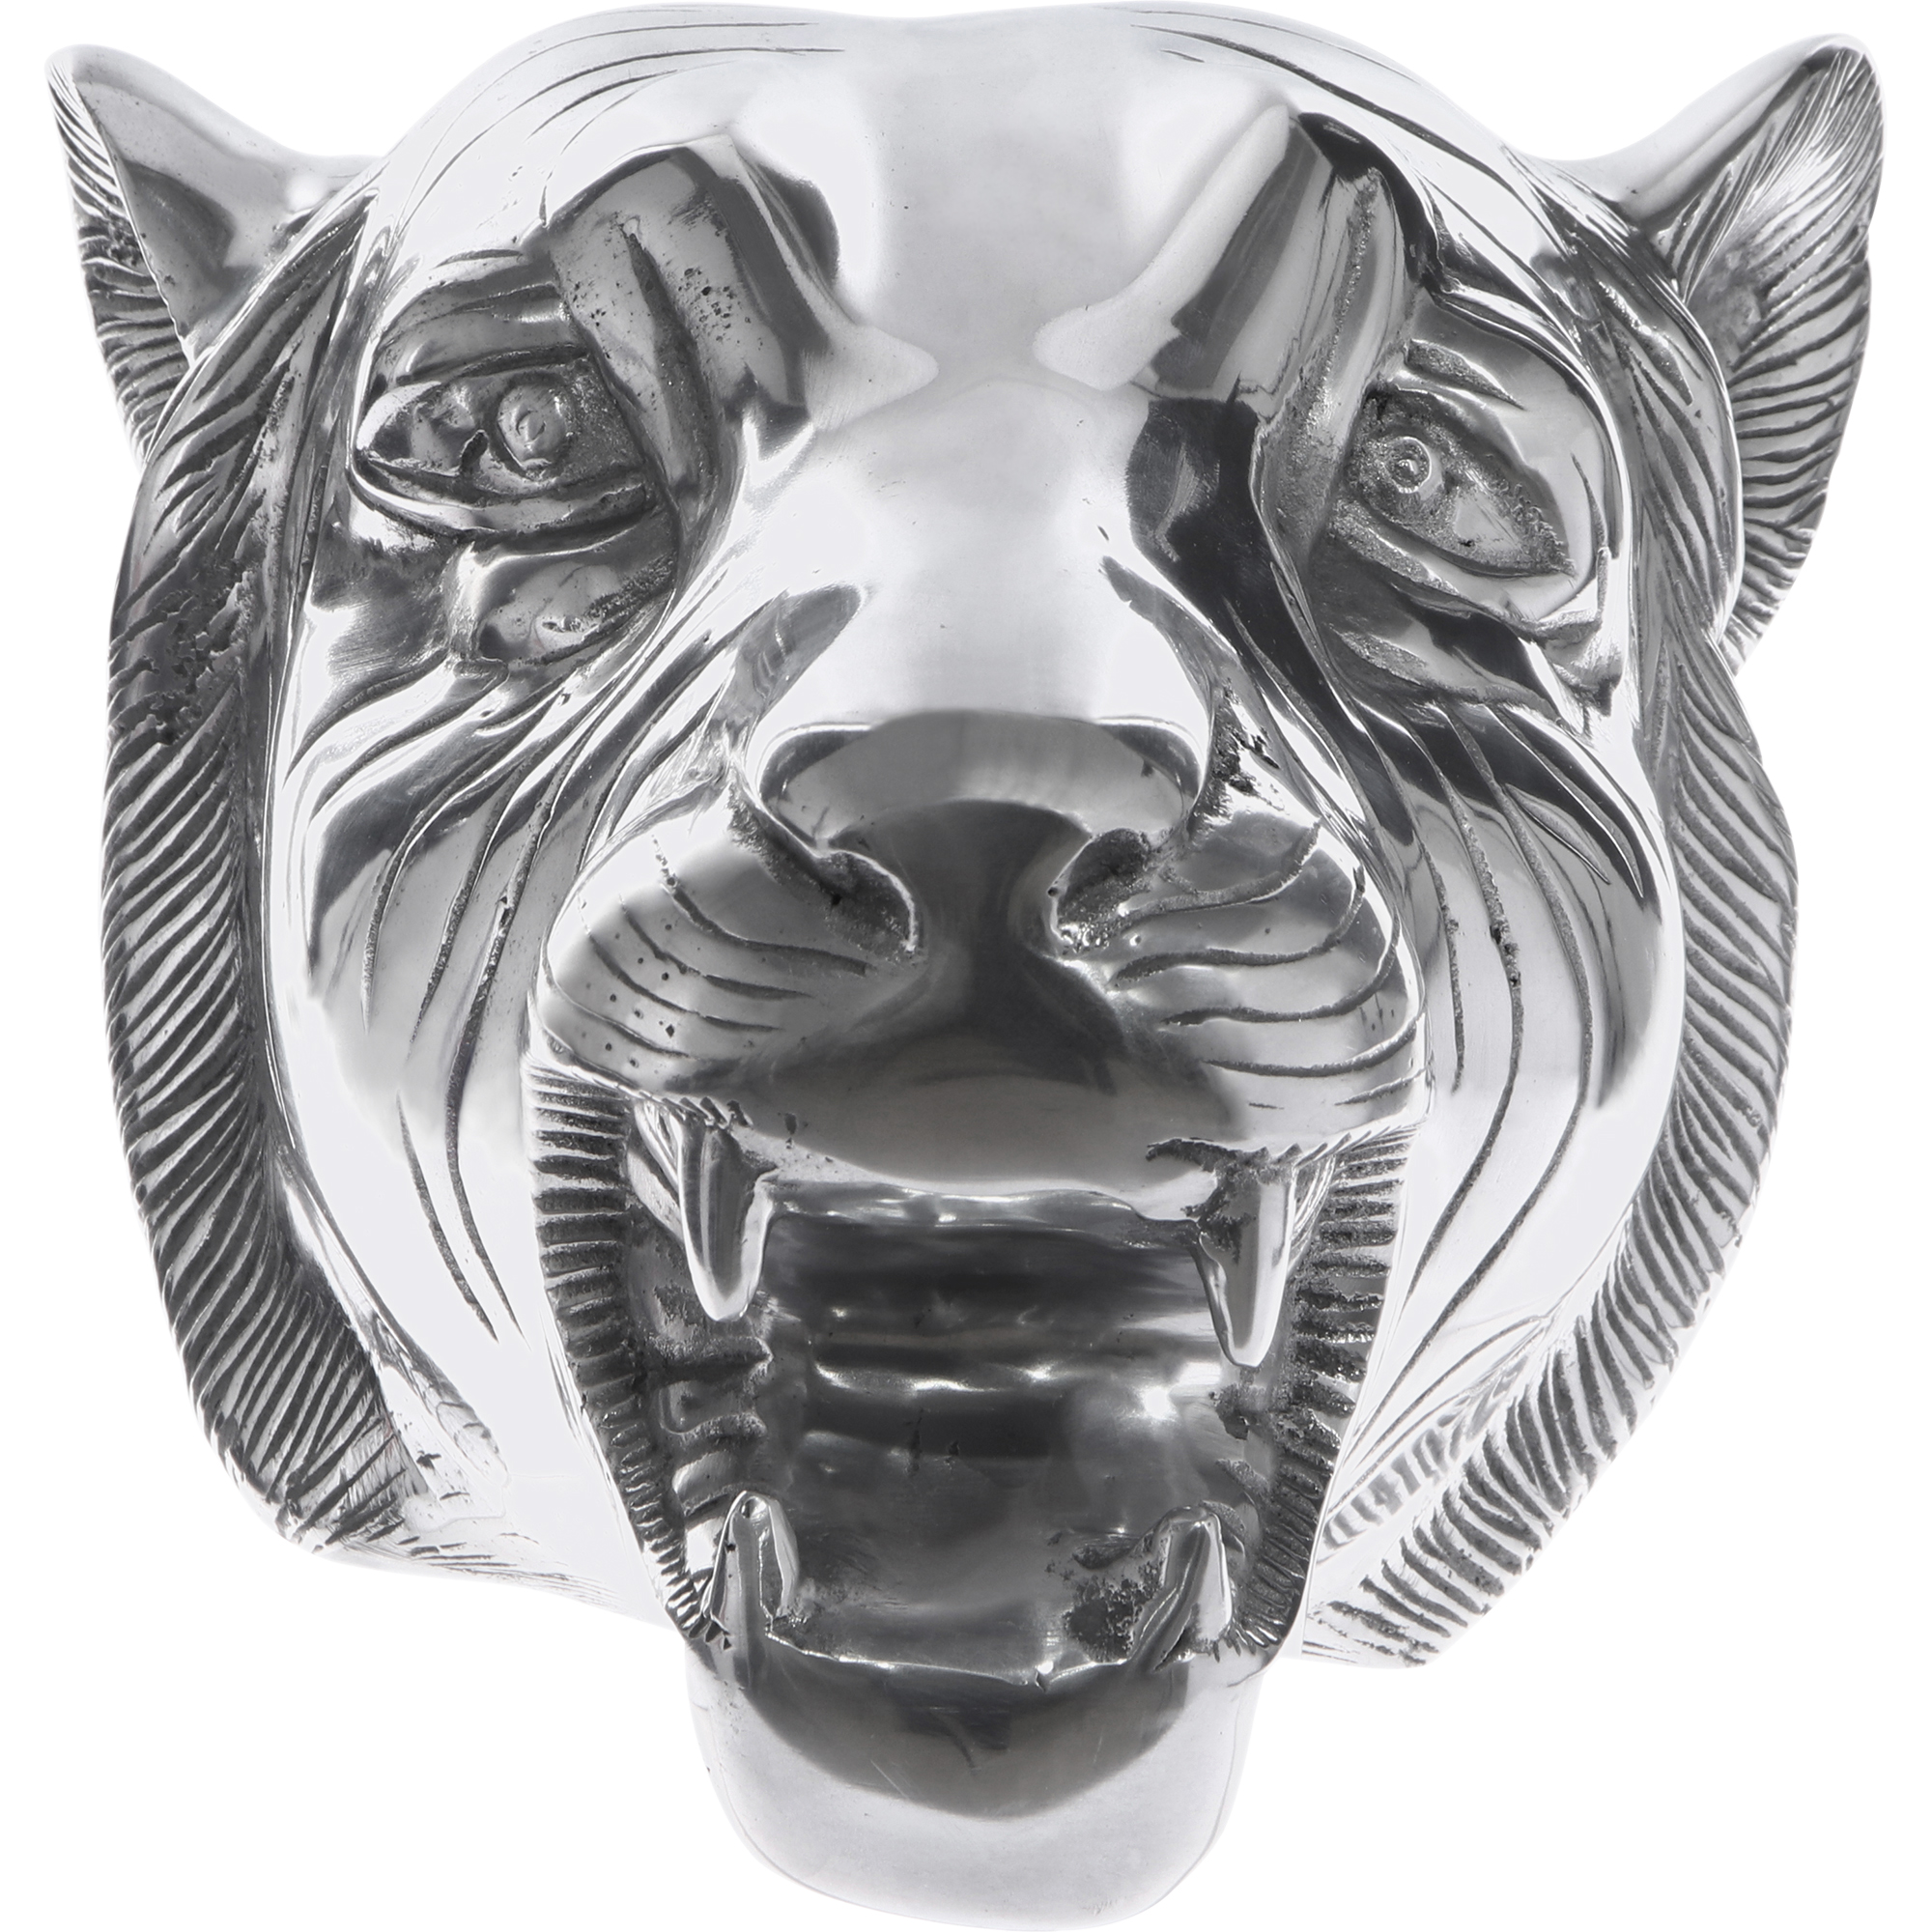 Декор Select international голова тигра 24x22x19 см изделие декоративное тпк полиформ голова тигра настенная 24 см бронза